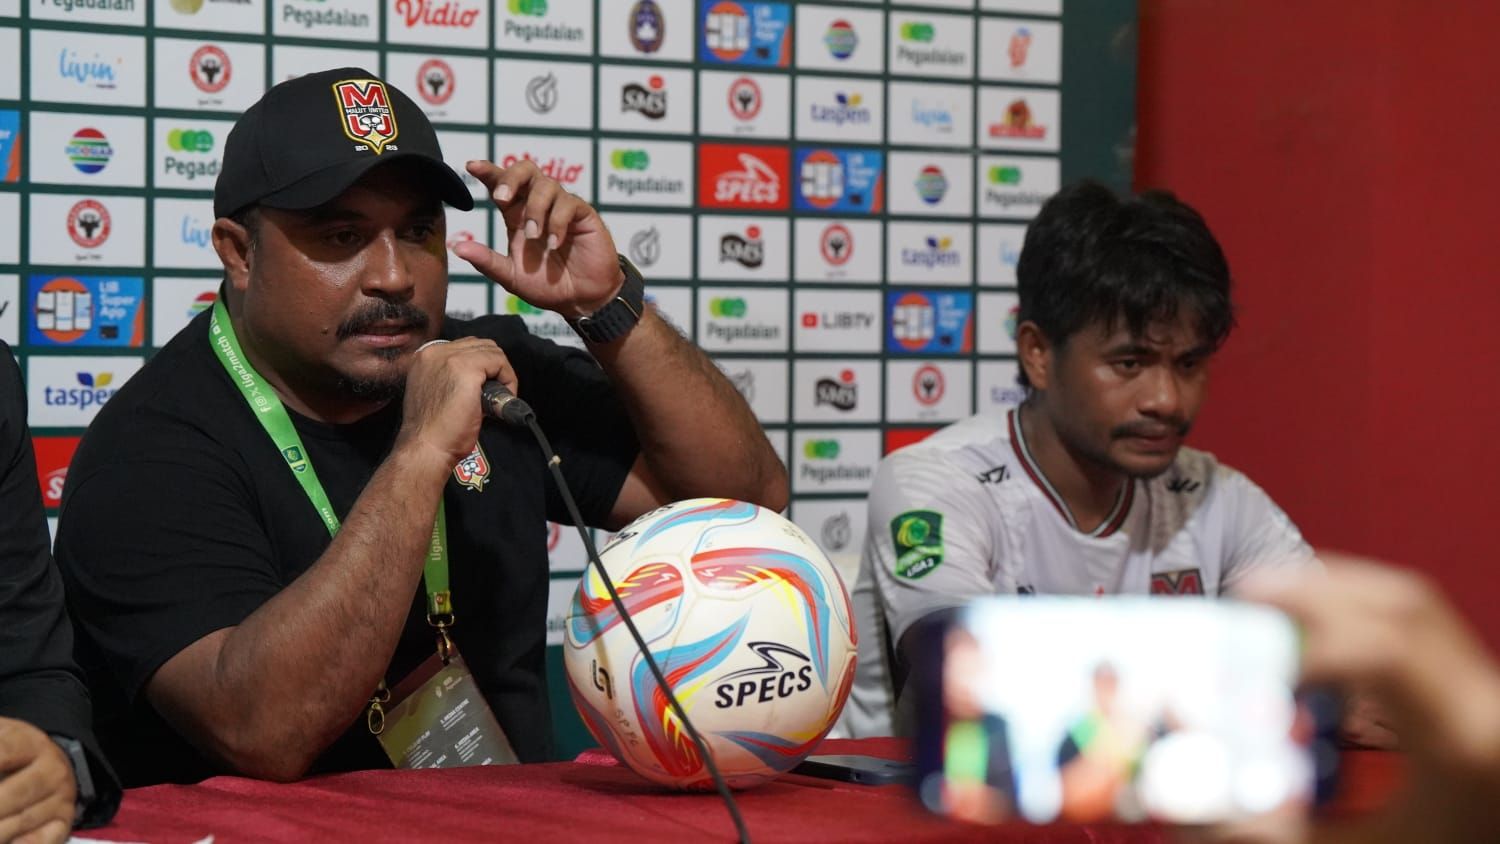 Ilham: Kekalahan di Semifinal Bukan Akhir bagi Malut United